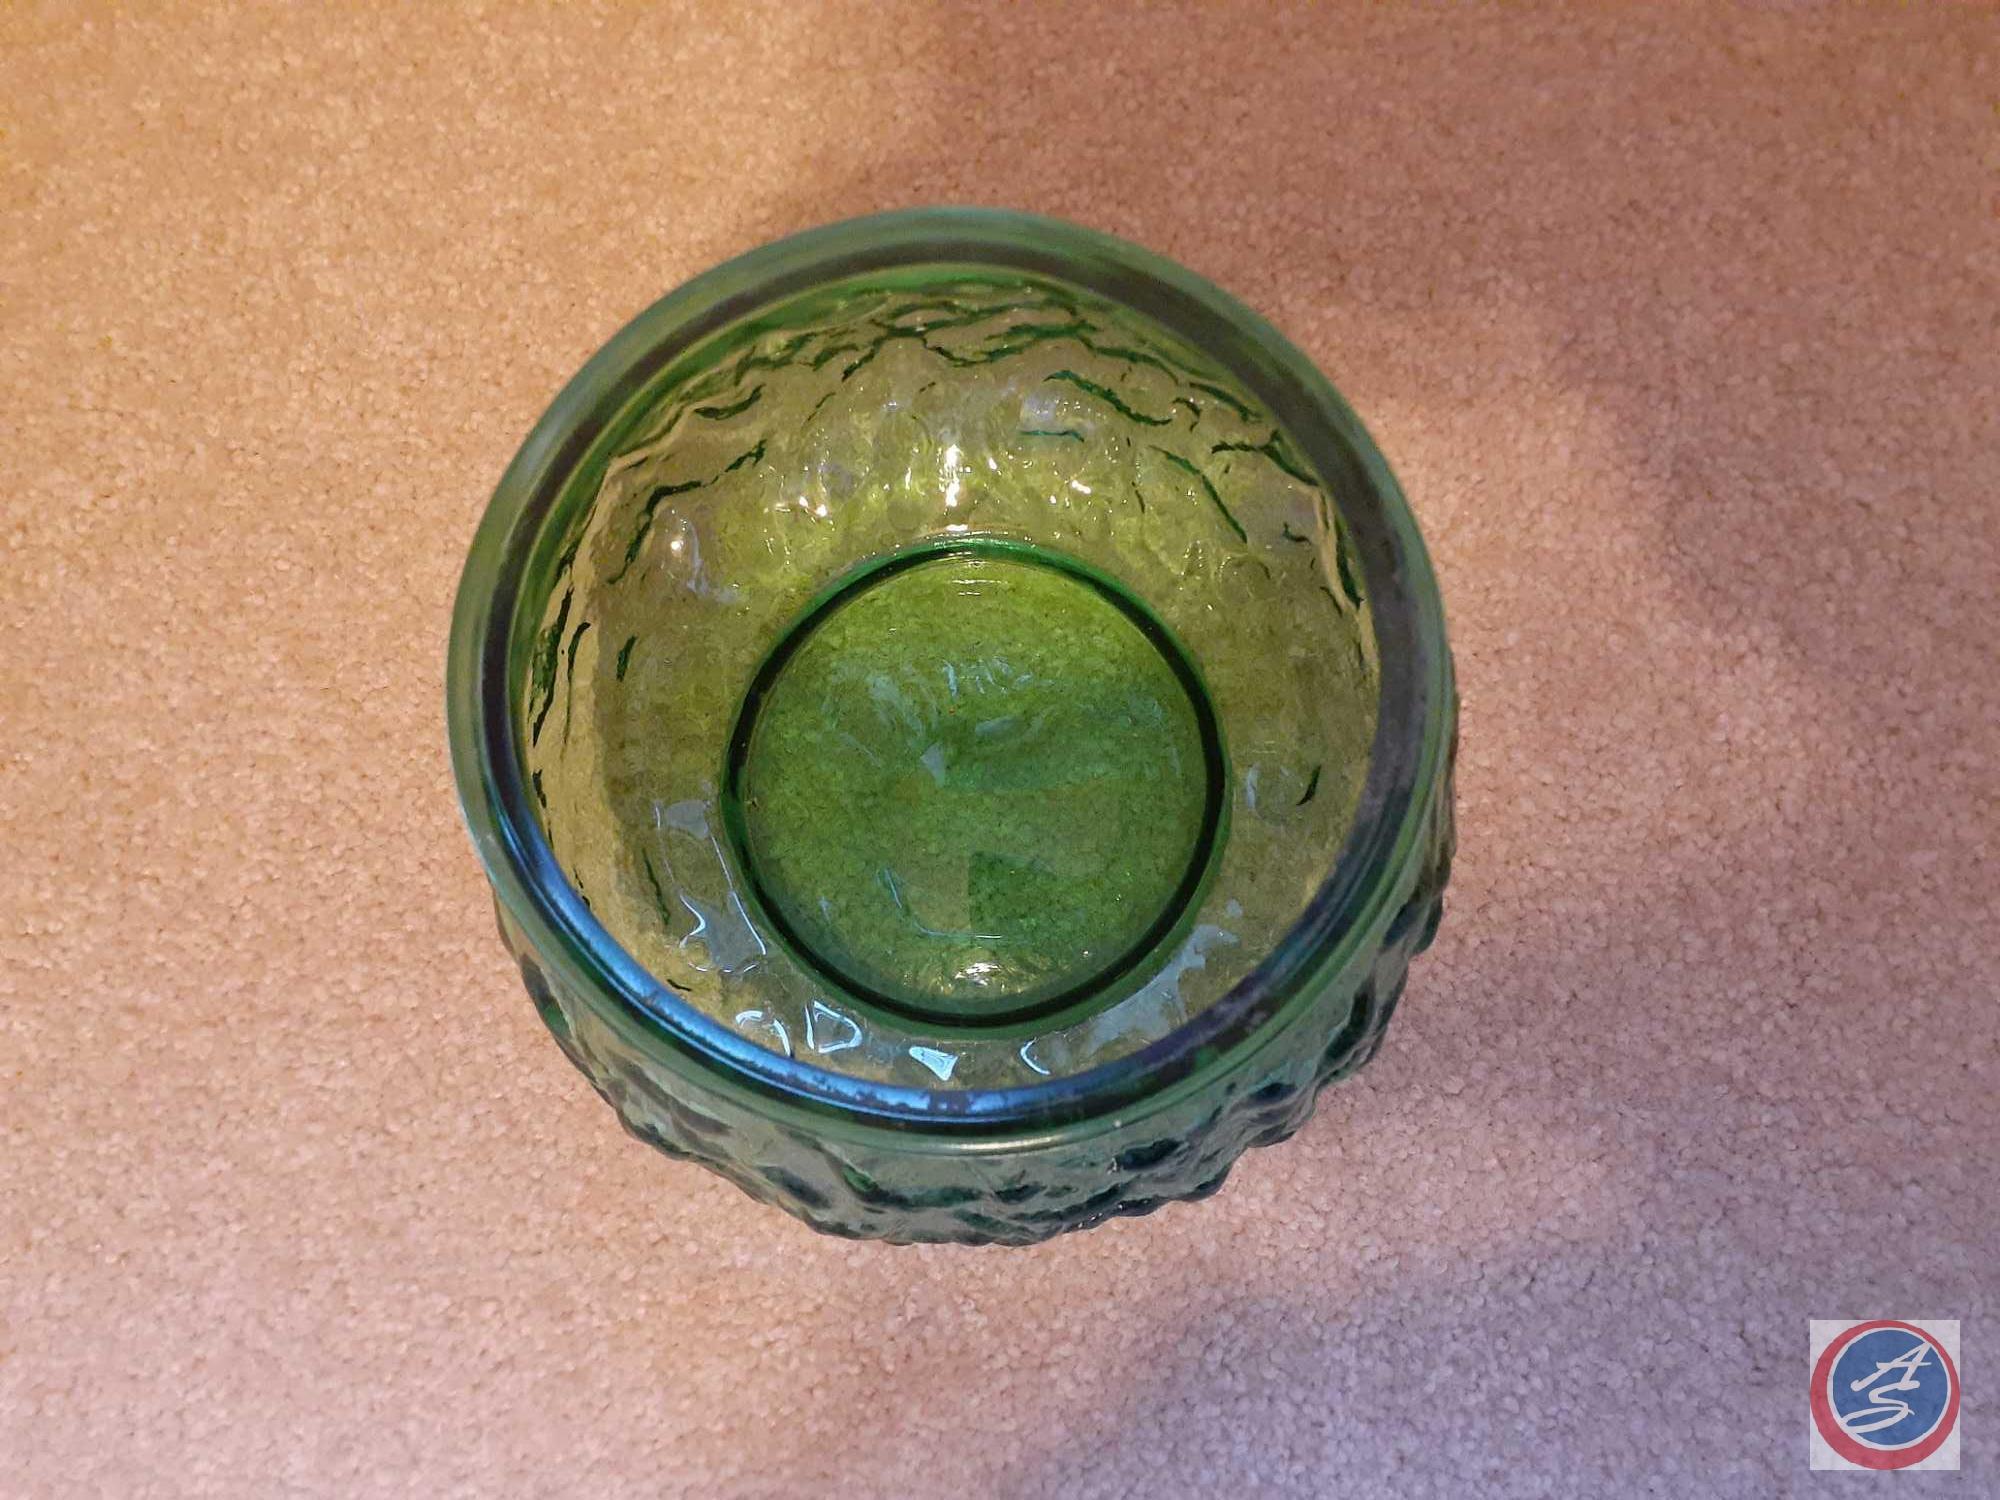 Original DeeBee Co. Imports Decorative Plate of Jesus, (2) E.O. Brody Company Green Glass Pieces,